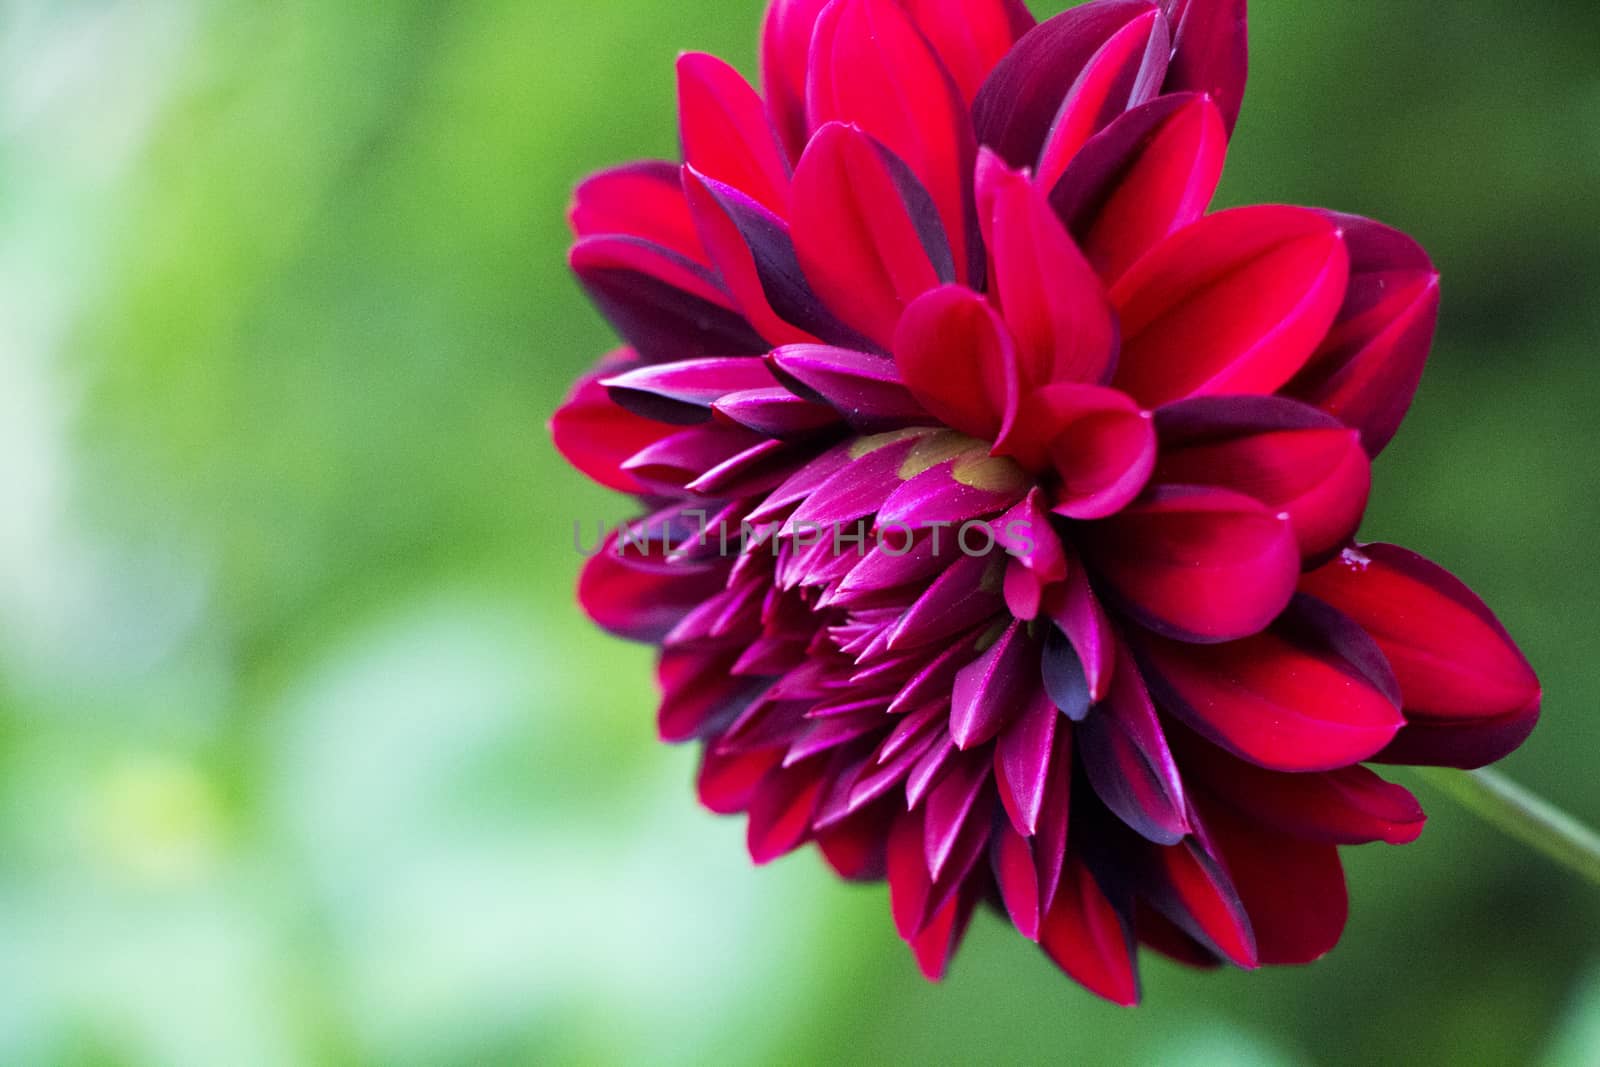 Red dark flower closeup with green background.